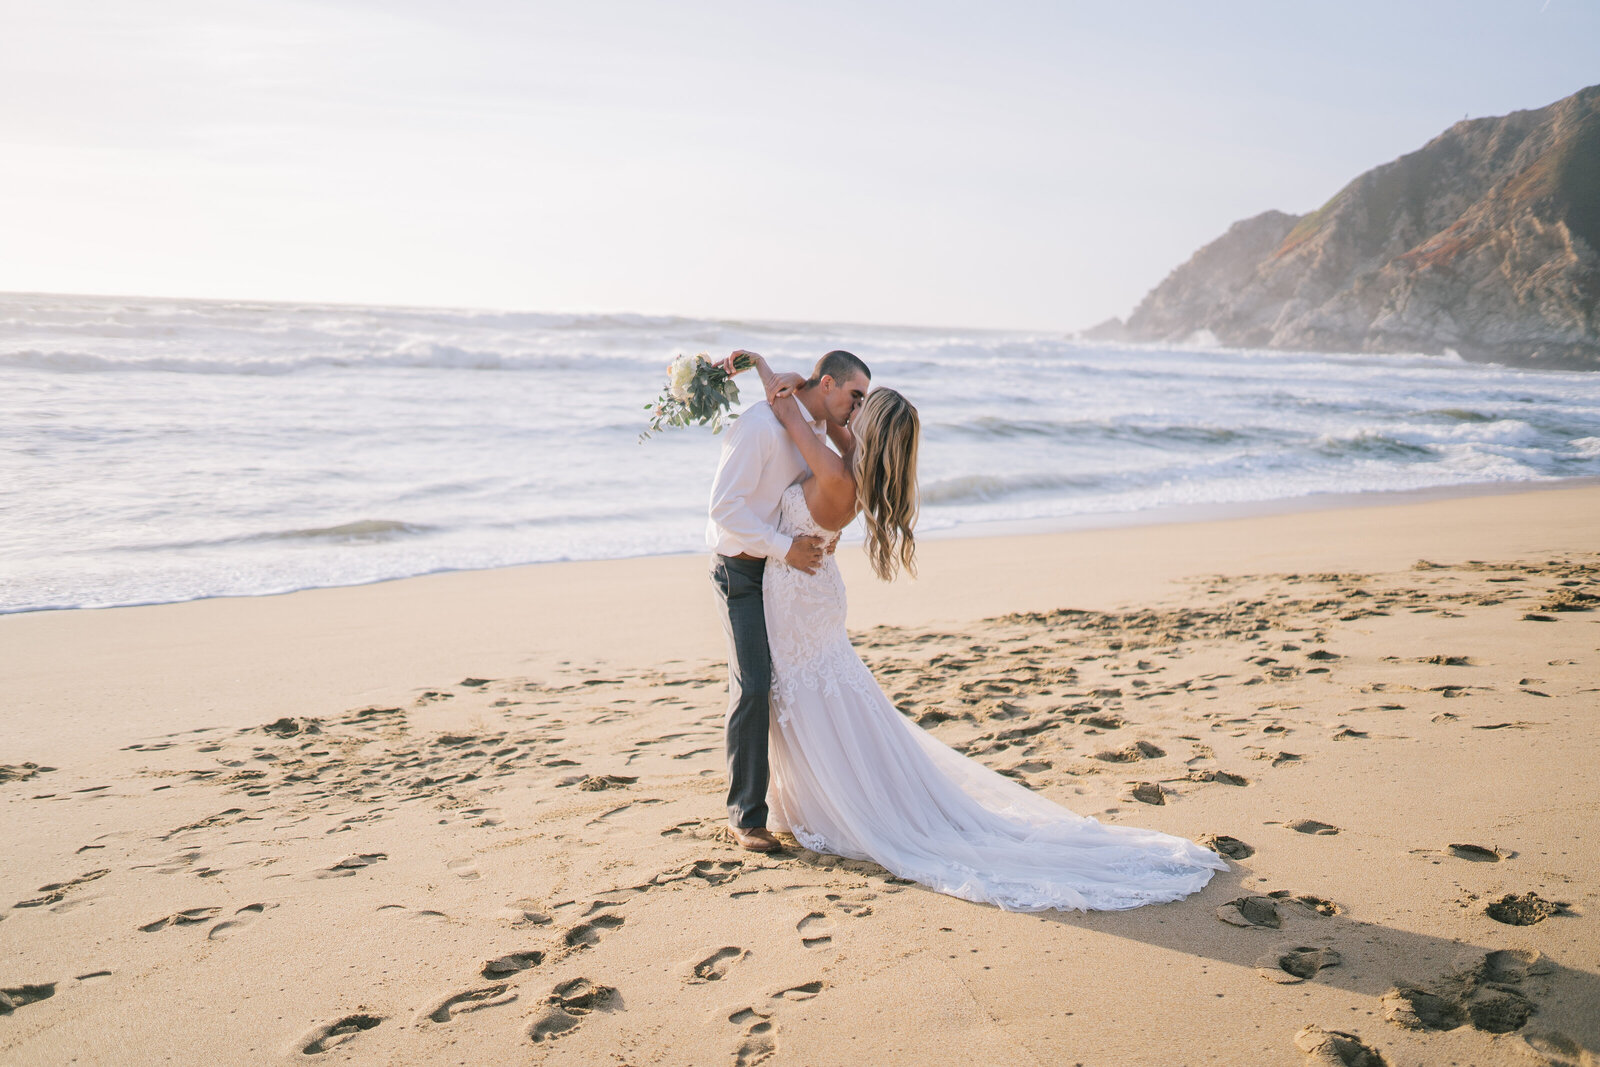 Sacramento Wedding Photographer captures bride and groom embracing on beach after wedding